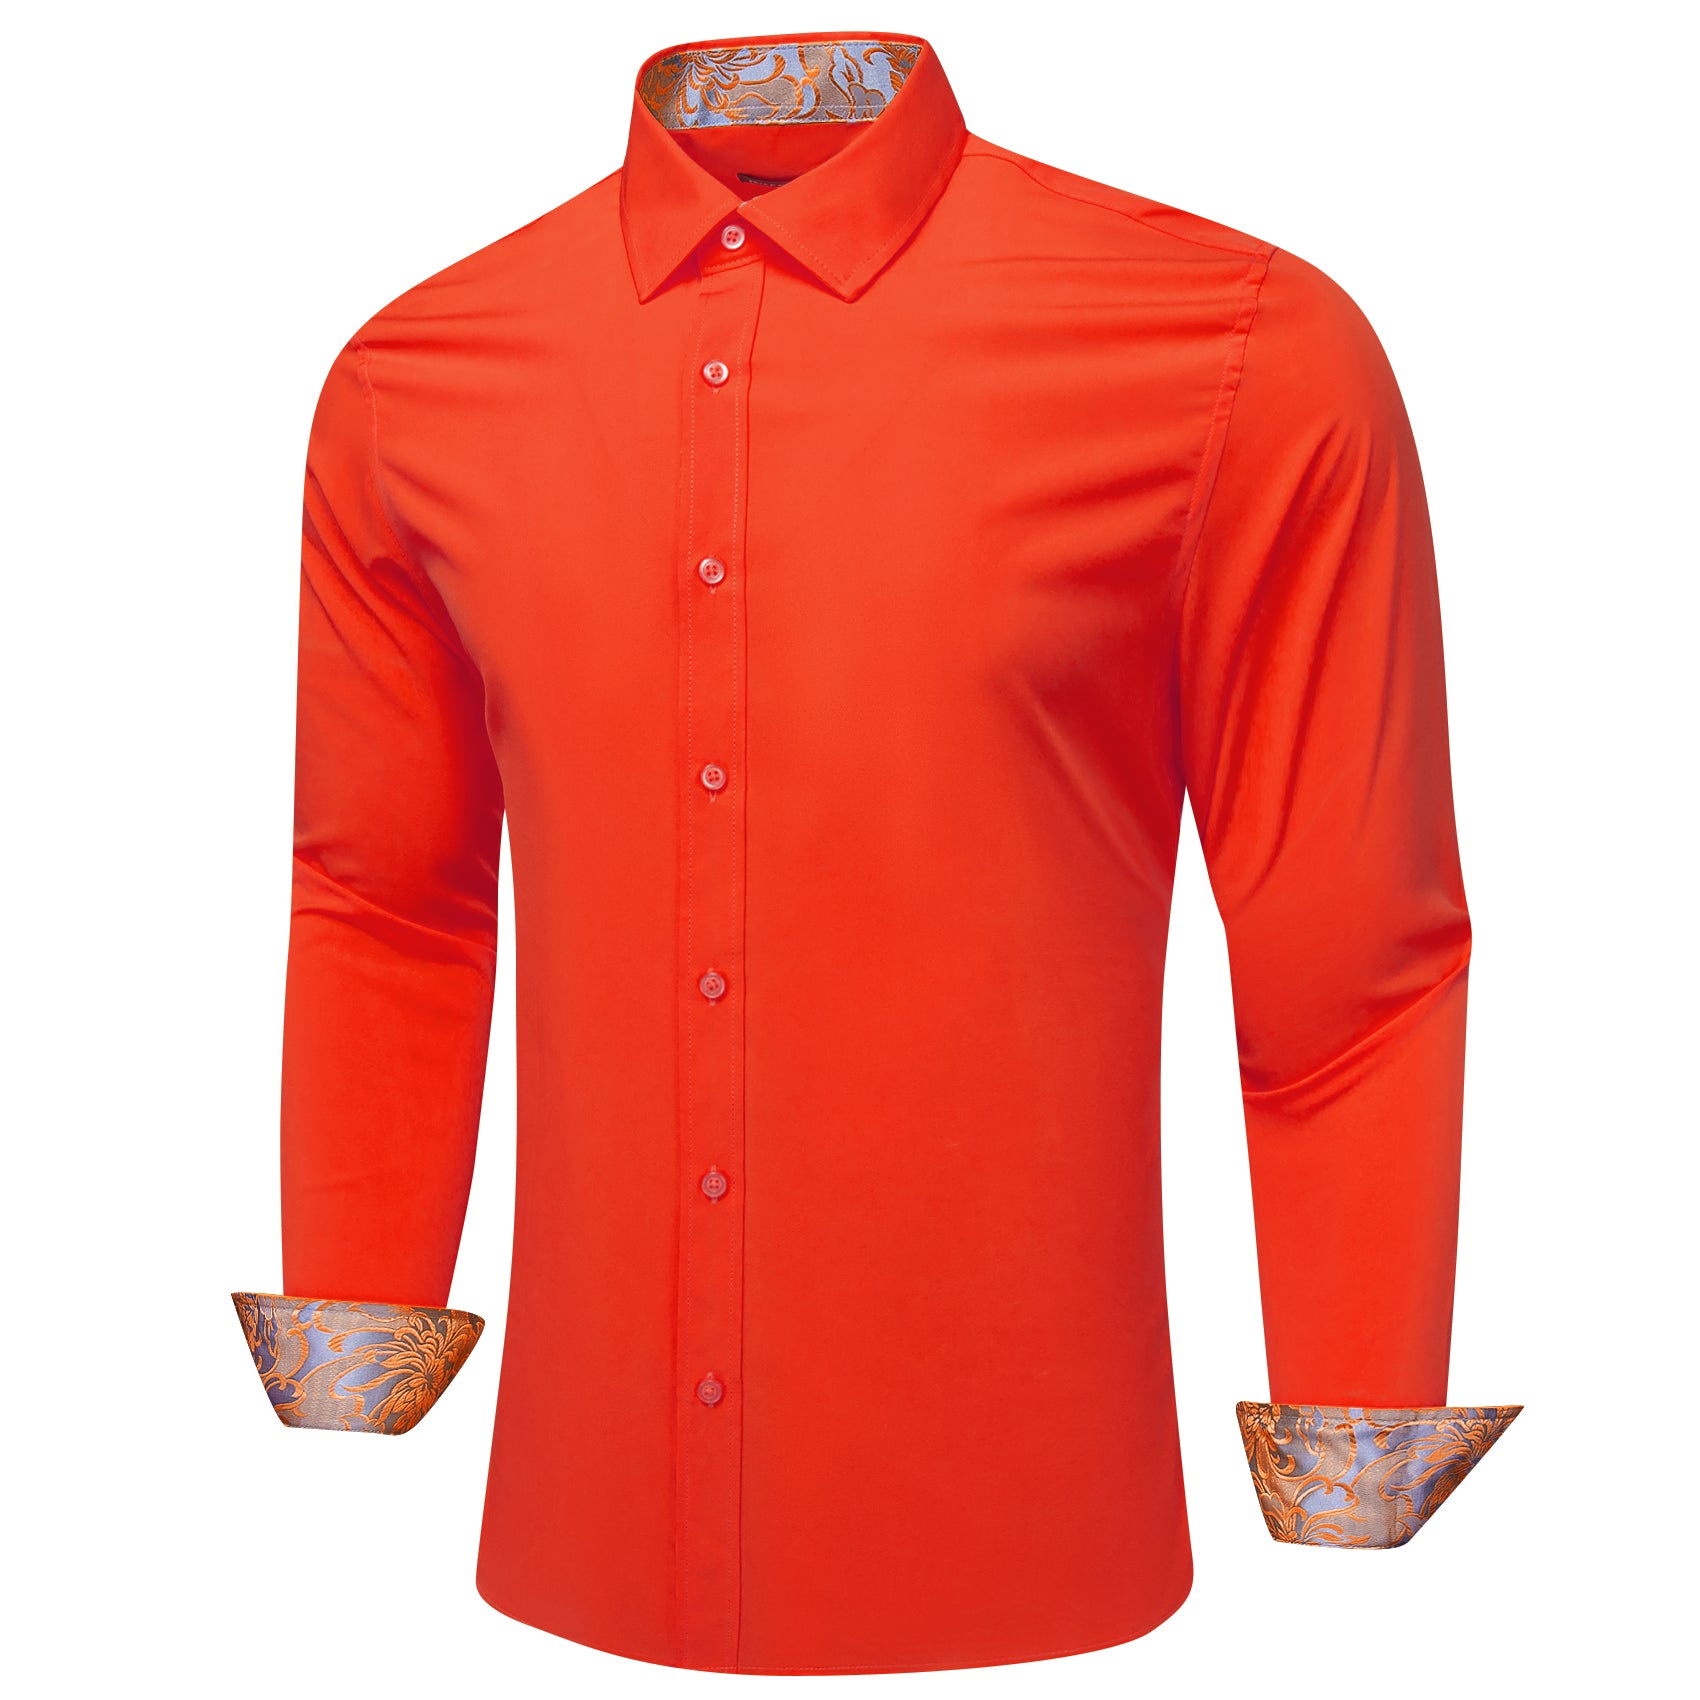 Barry.wang Formal Red Orange Splicing Men's Business Shirt